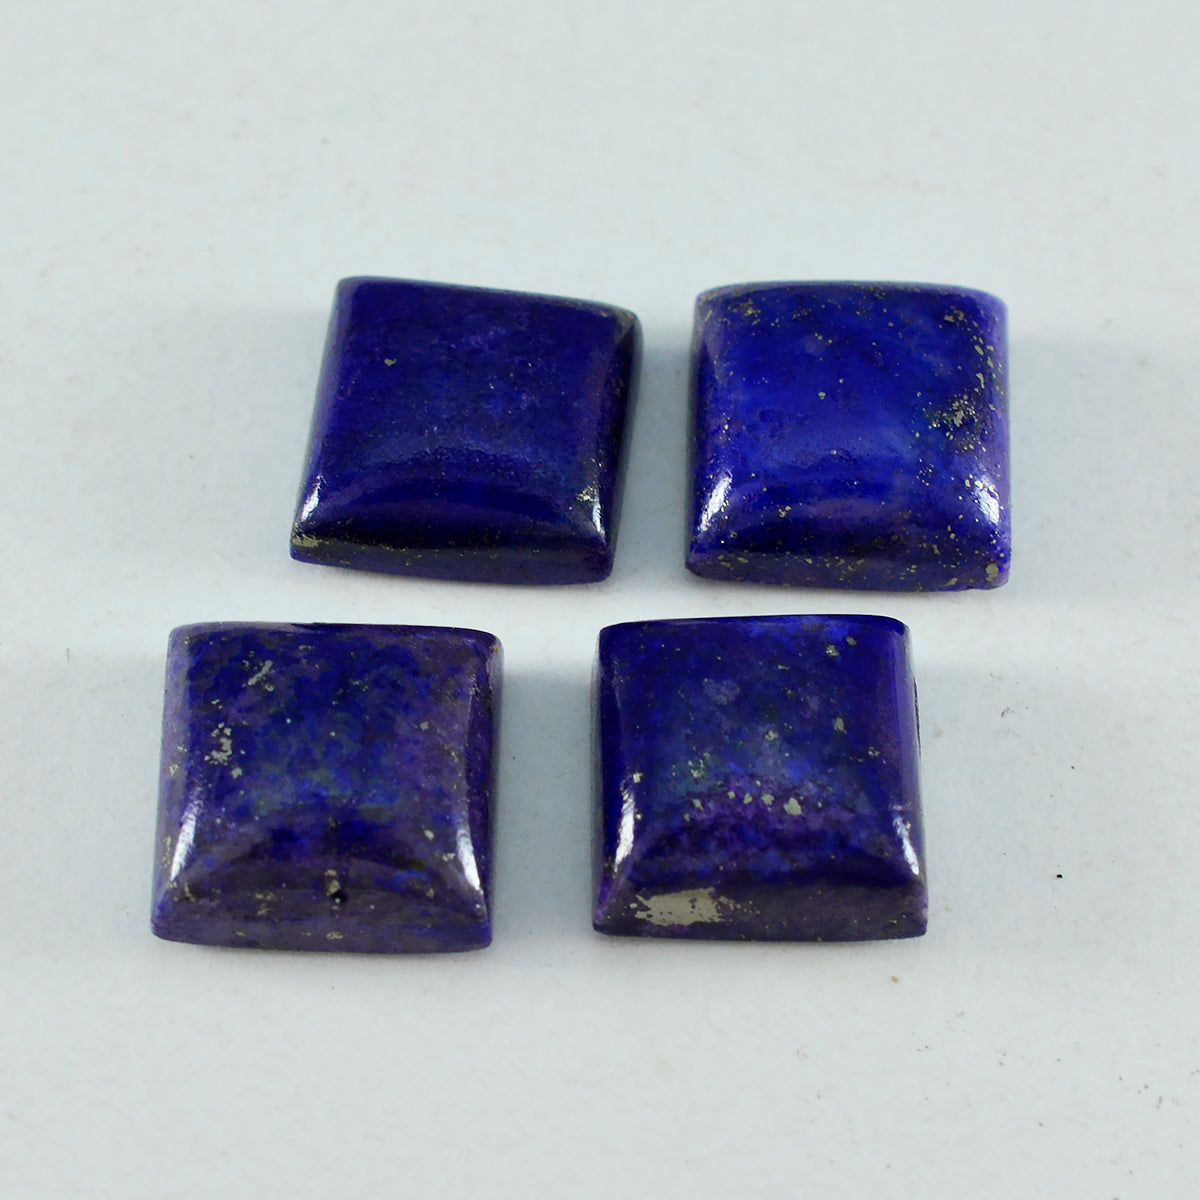 riyogems 1pc ブルー ラピスラズリ カボション 15x15 mm 正方形 a1 品質石